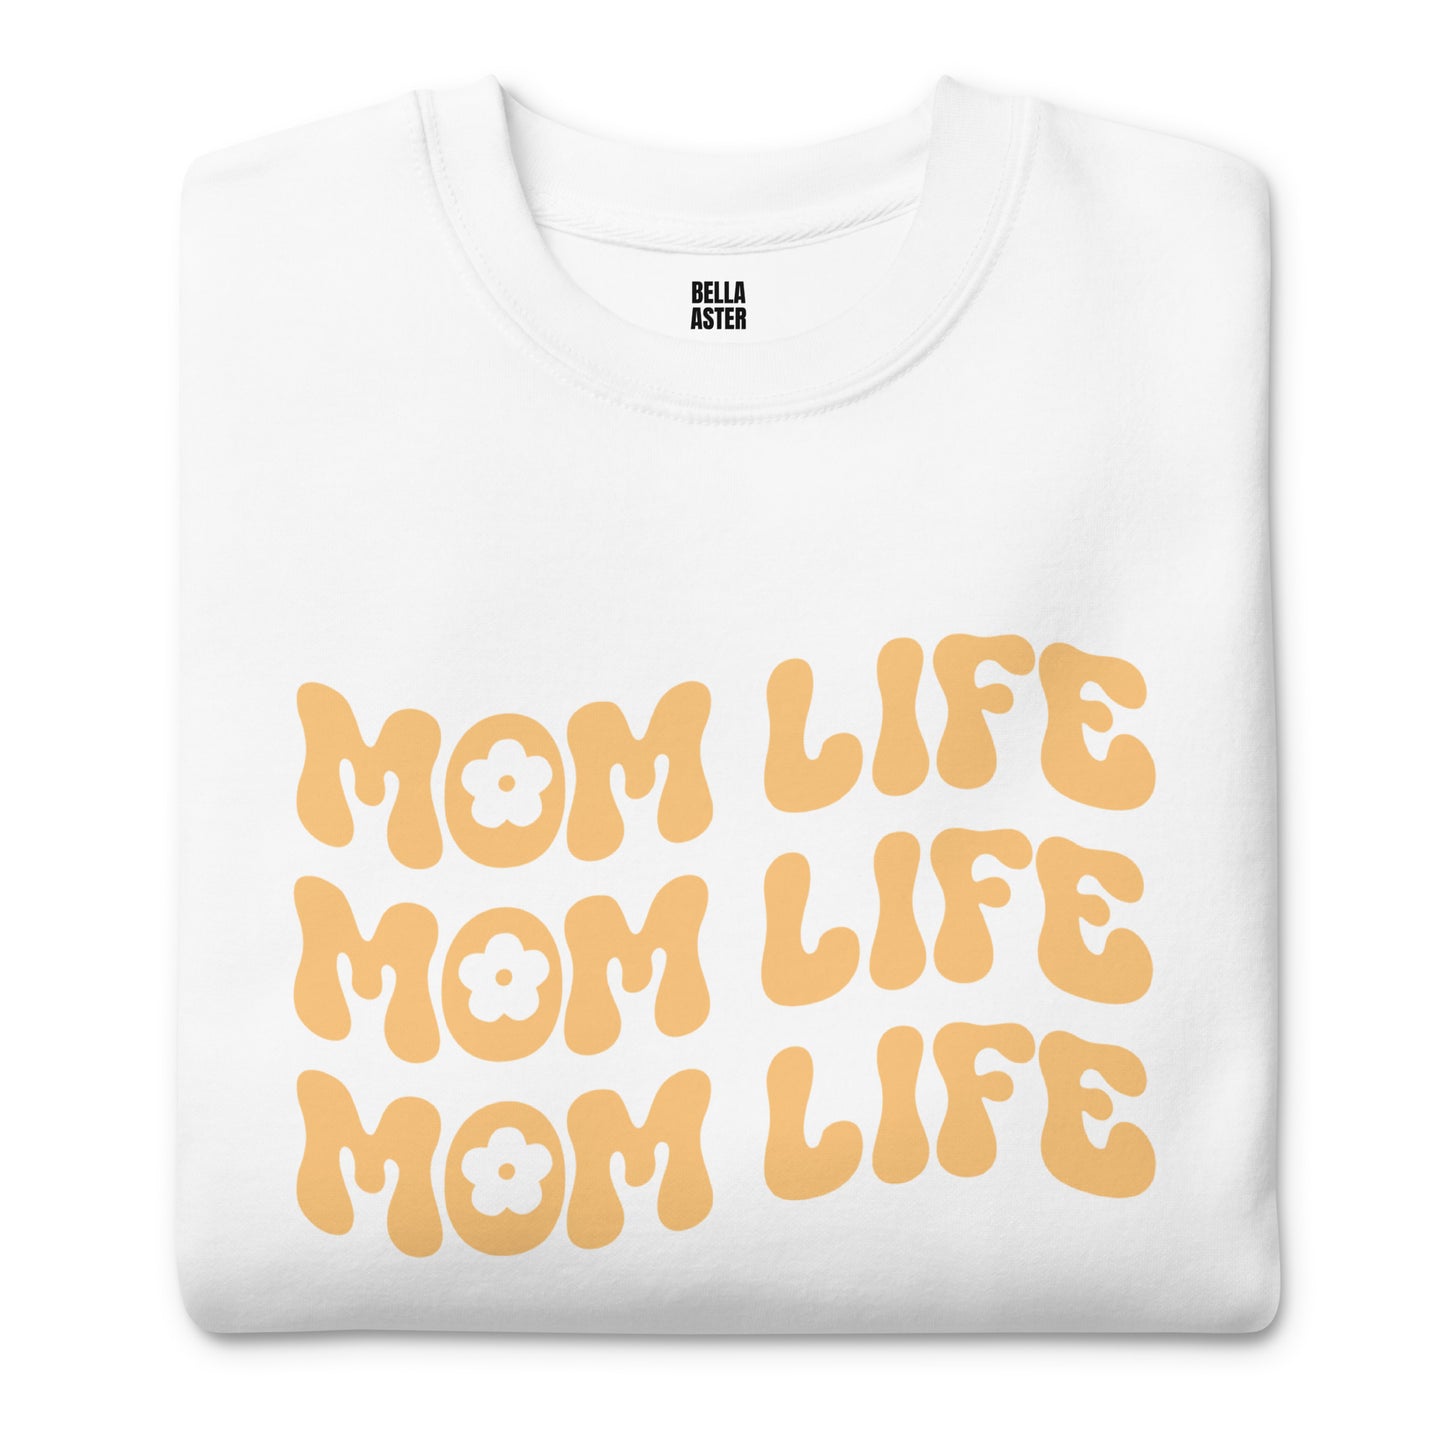 Mom Life Premium Sweatshirt